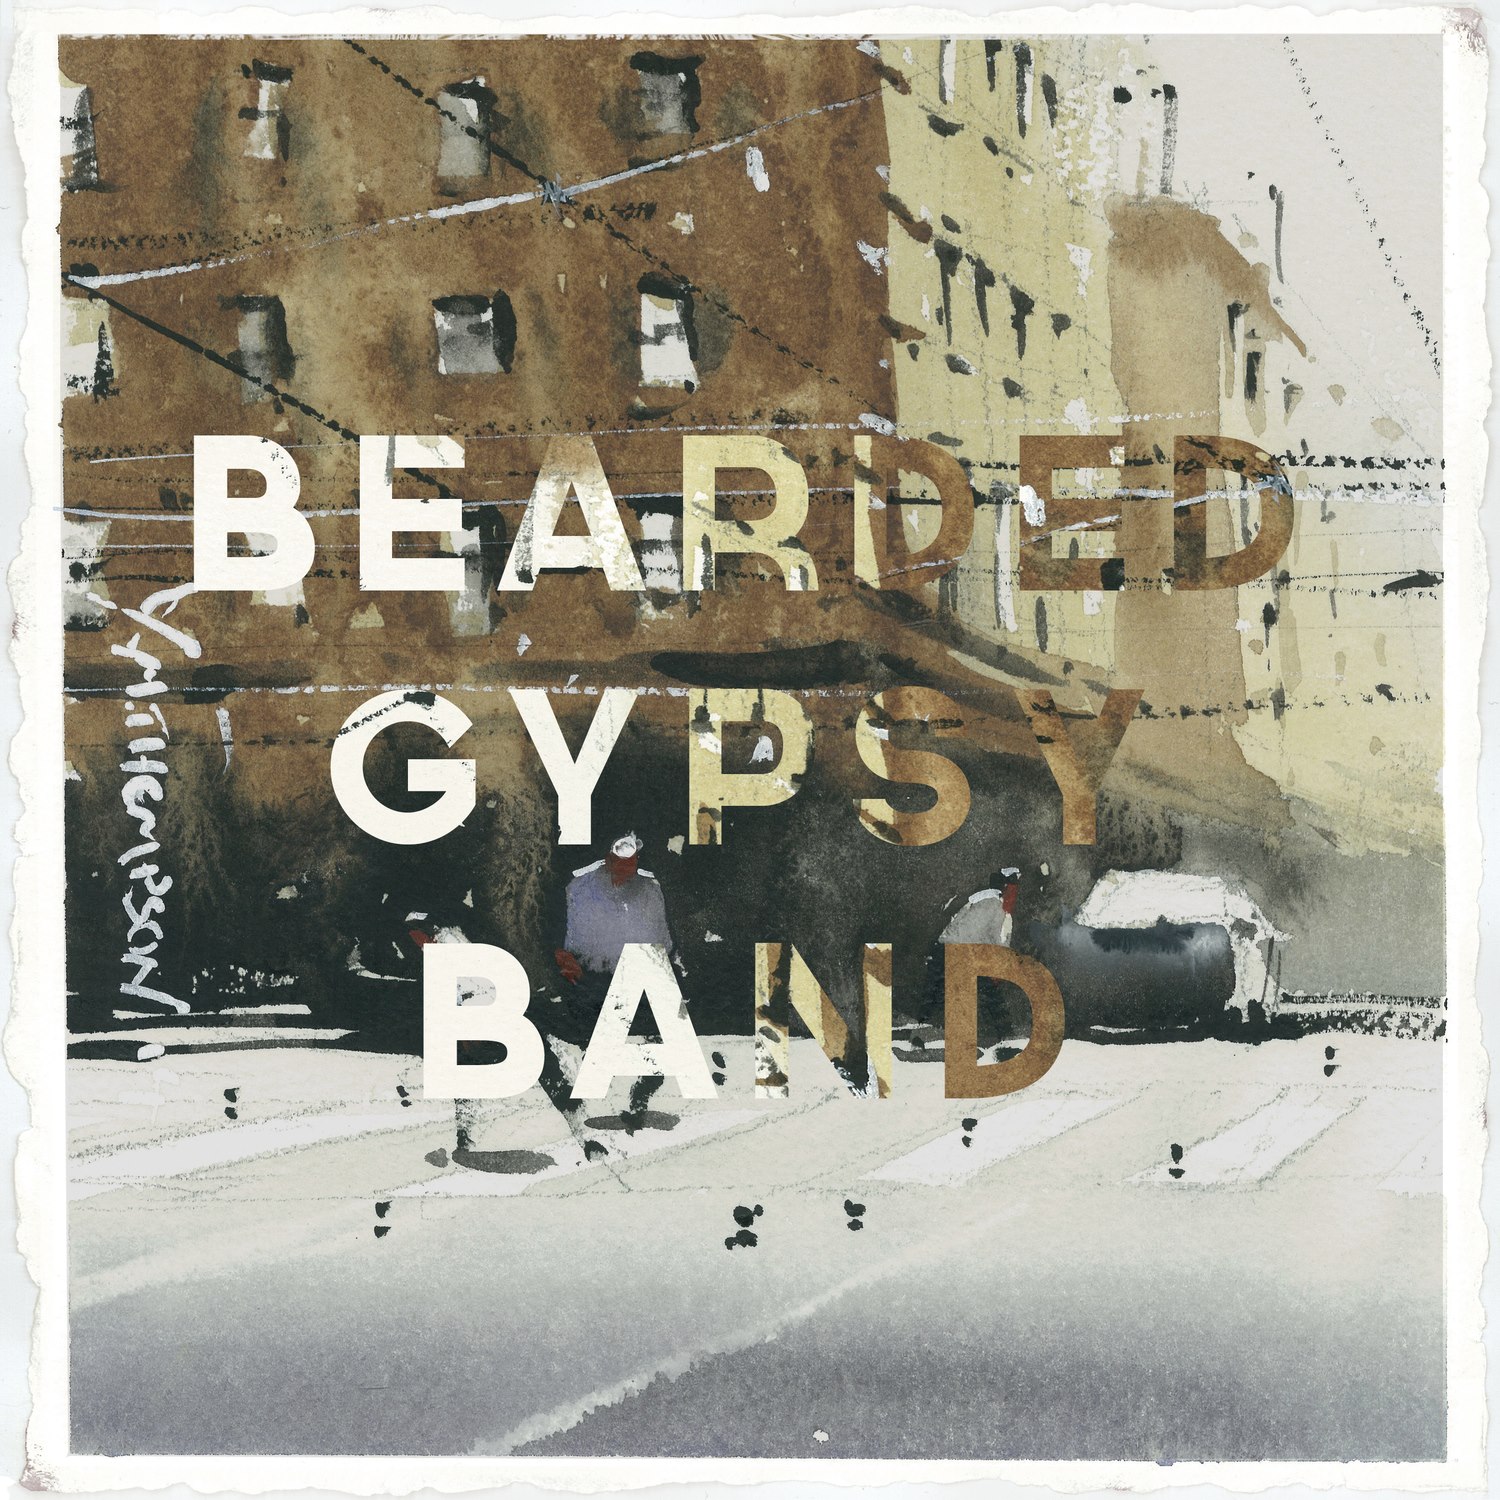 The Bearded Gypsy Band